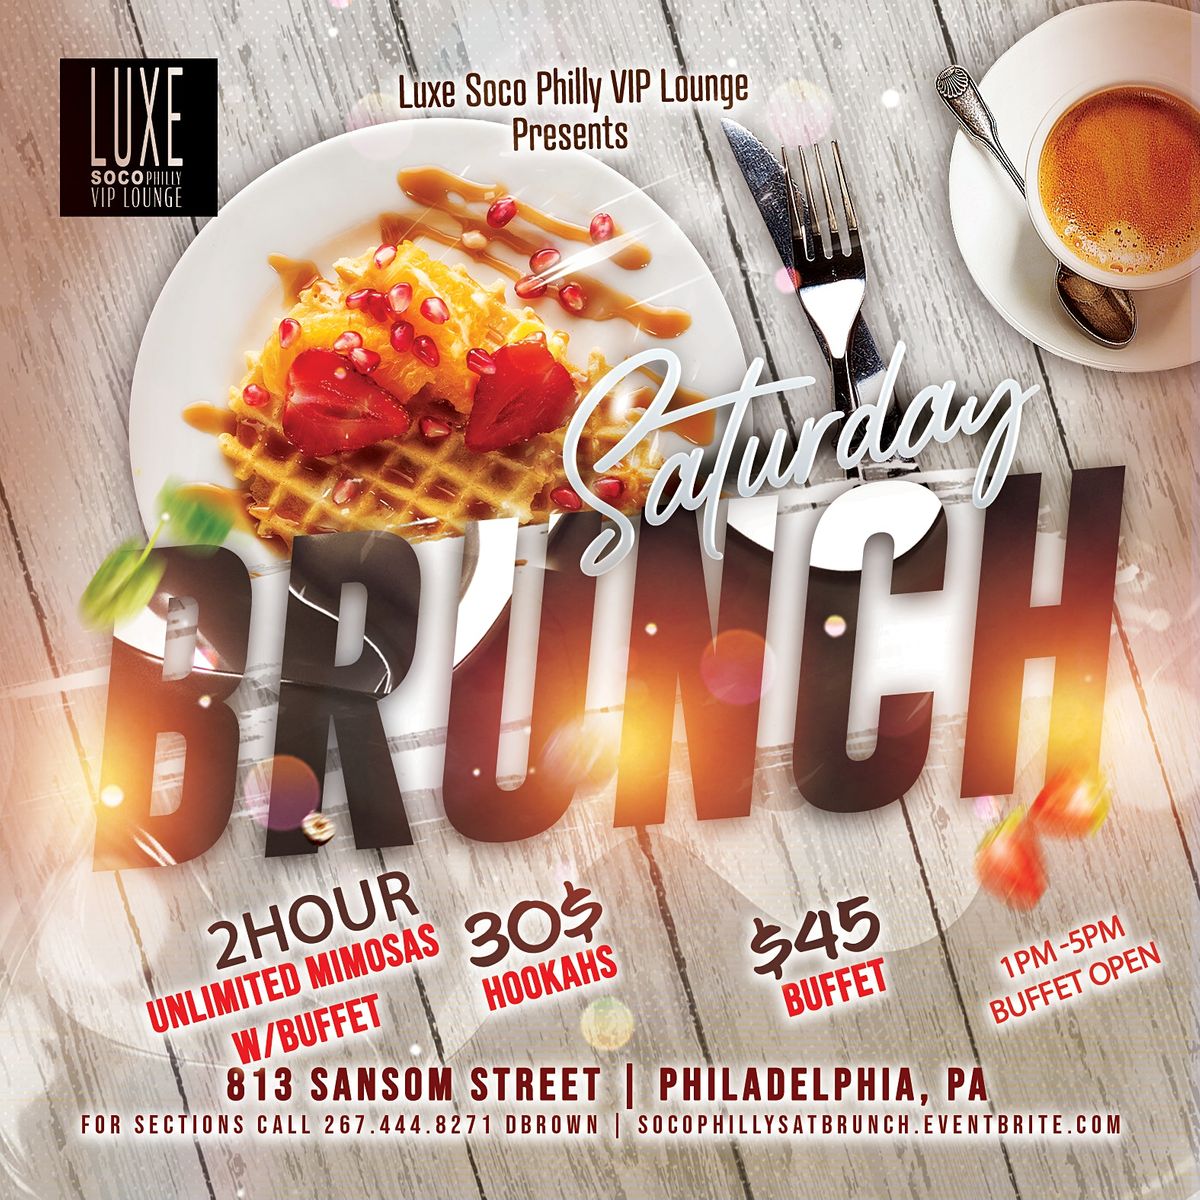 We Love Saturday Brunch | Soco Philly VIP Lounge |813 Sansom Street 1-5pm